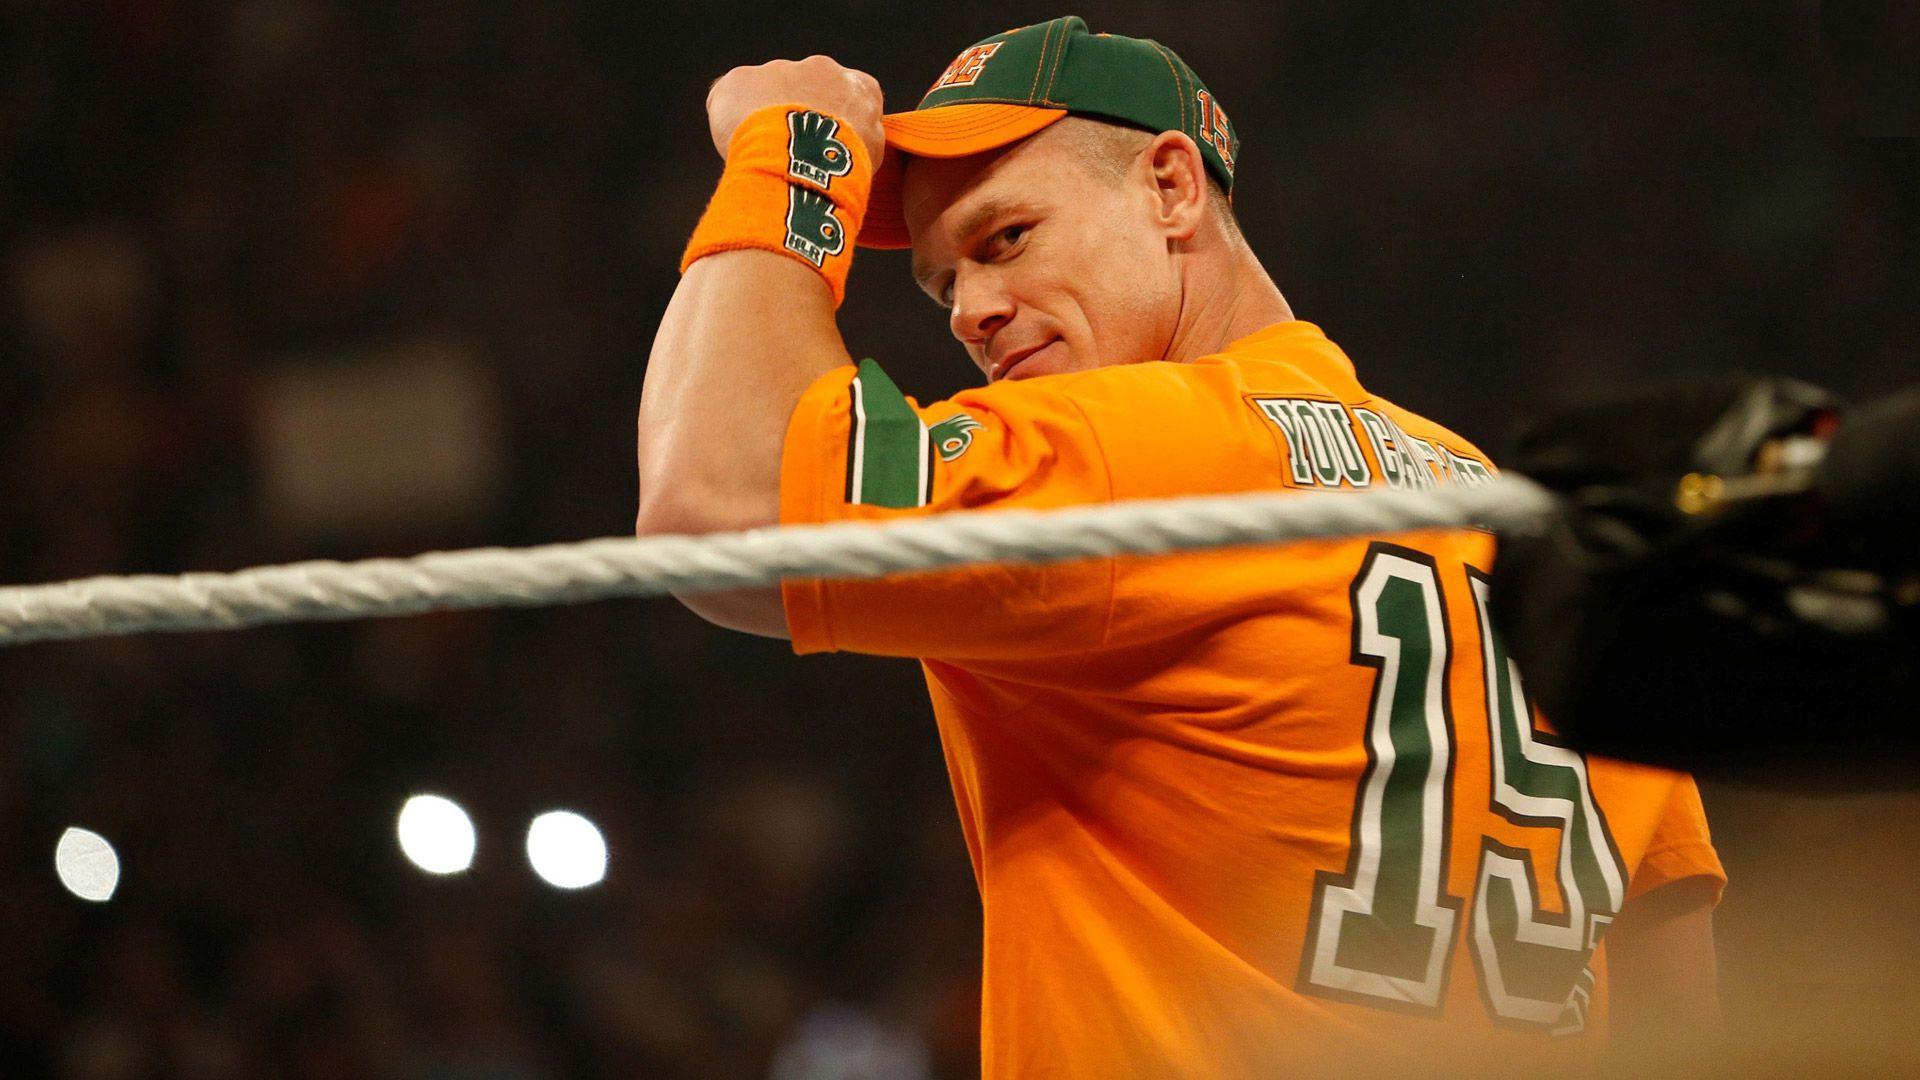 Wwe John Cena Wallpaper Download Raw